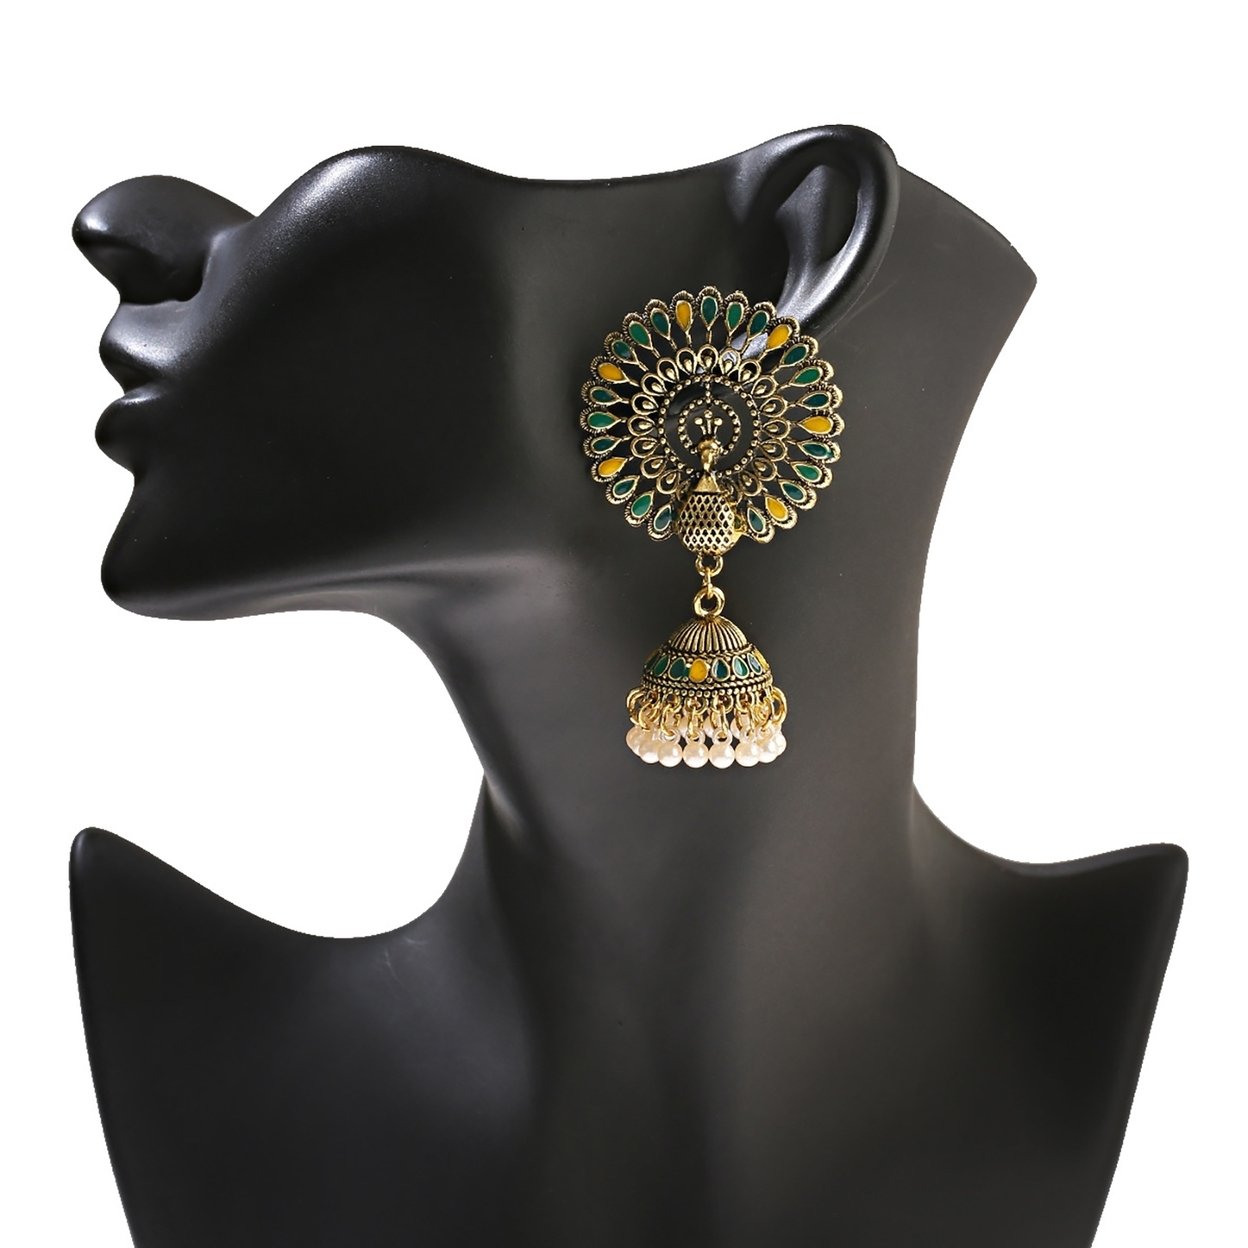 Generic 2Pcs Dangle Earrings Indian Jewelry for Daily Wear